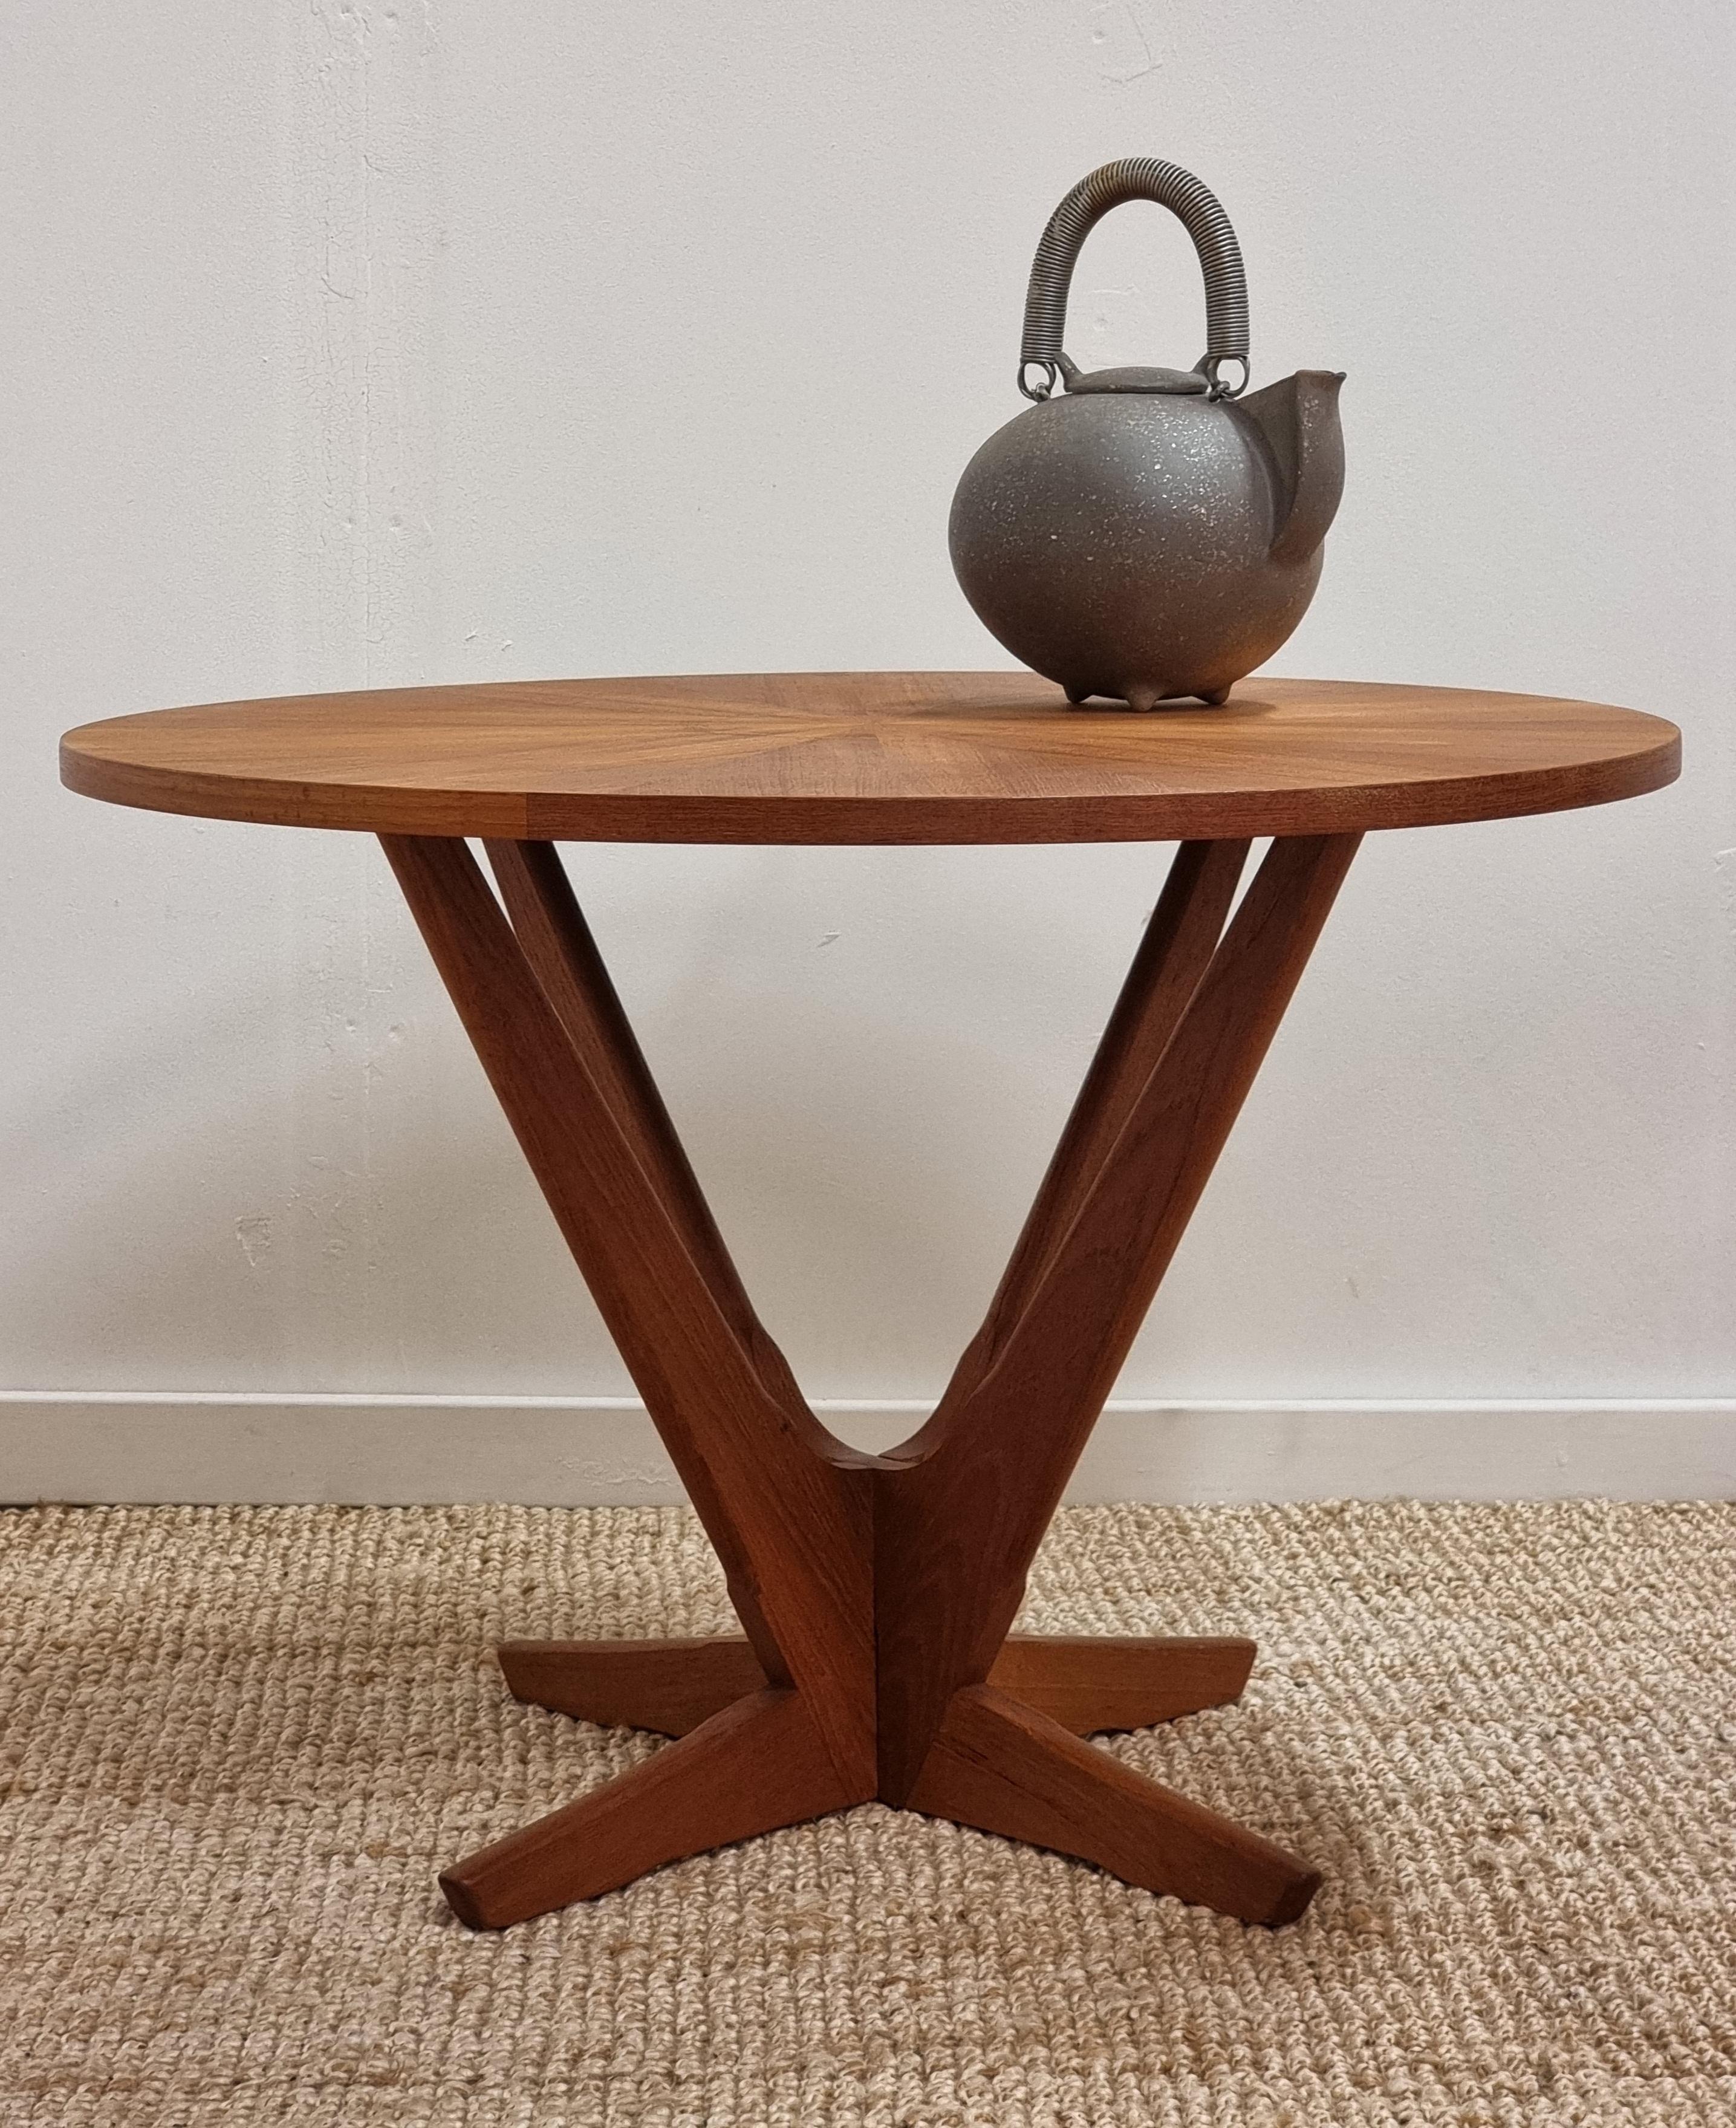 Sculptural coffee table in teak, model 'Kubus'. Designed by Søren Georg Jensen, for Tønder Møbelfabrik, Denmark mid-1900s.

Top with beautiful veneer pattern and starburst shaped legs. 



 